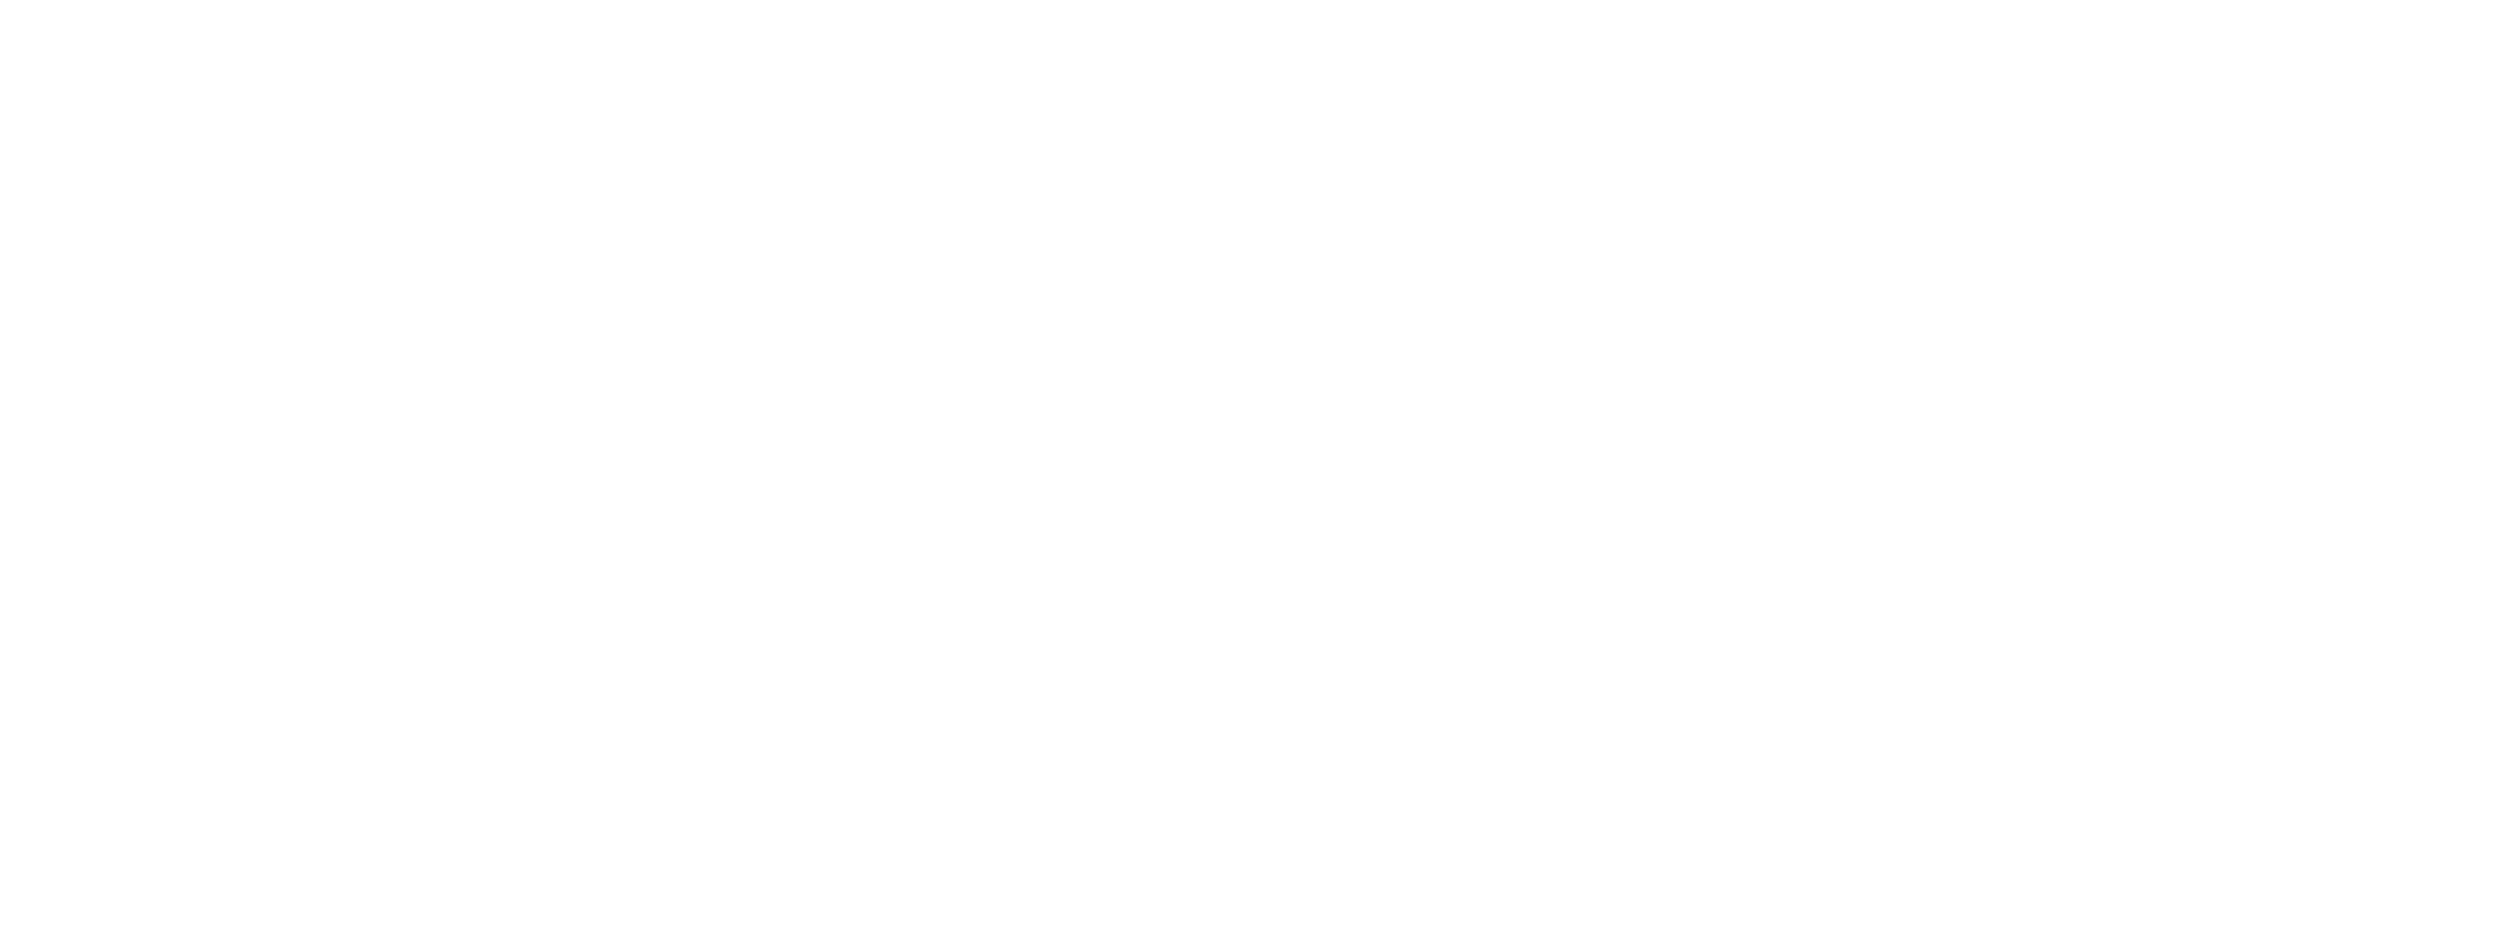 QMP Agency